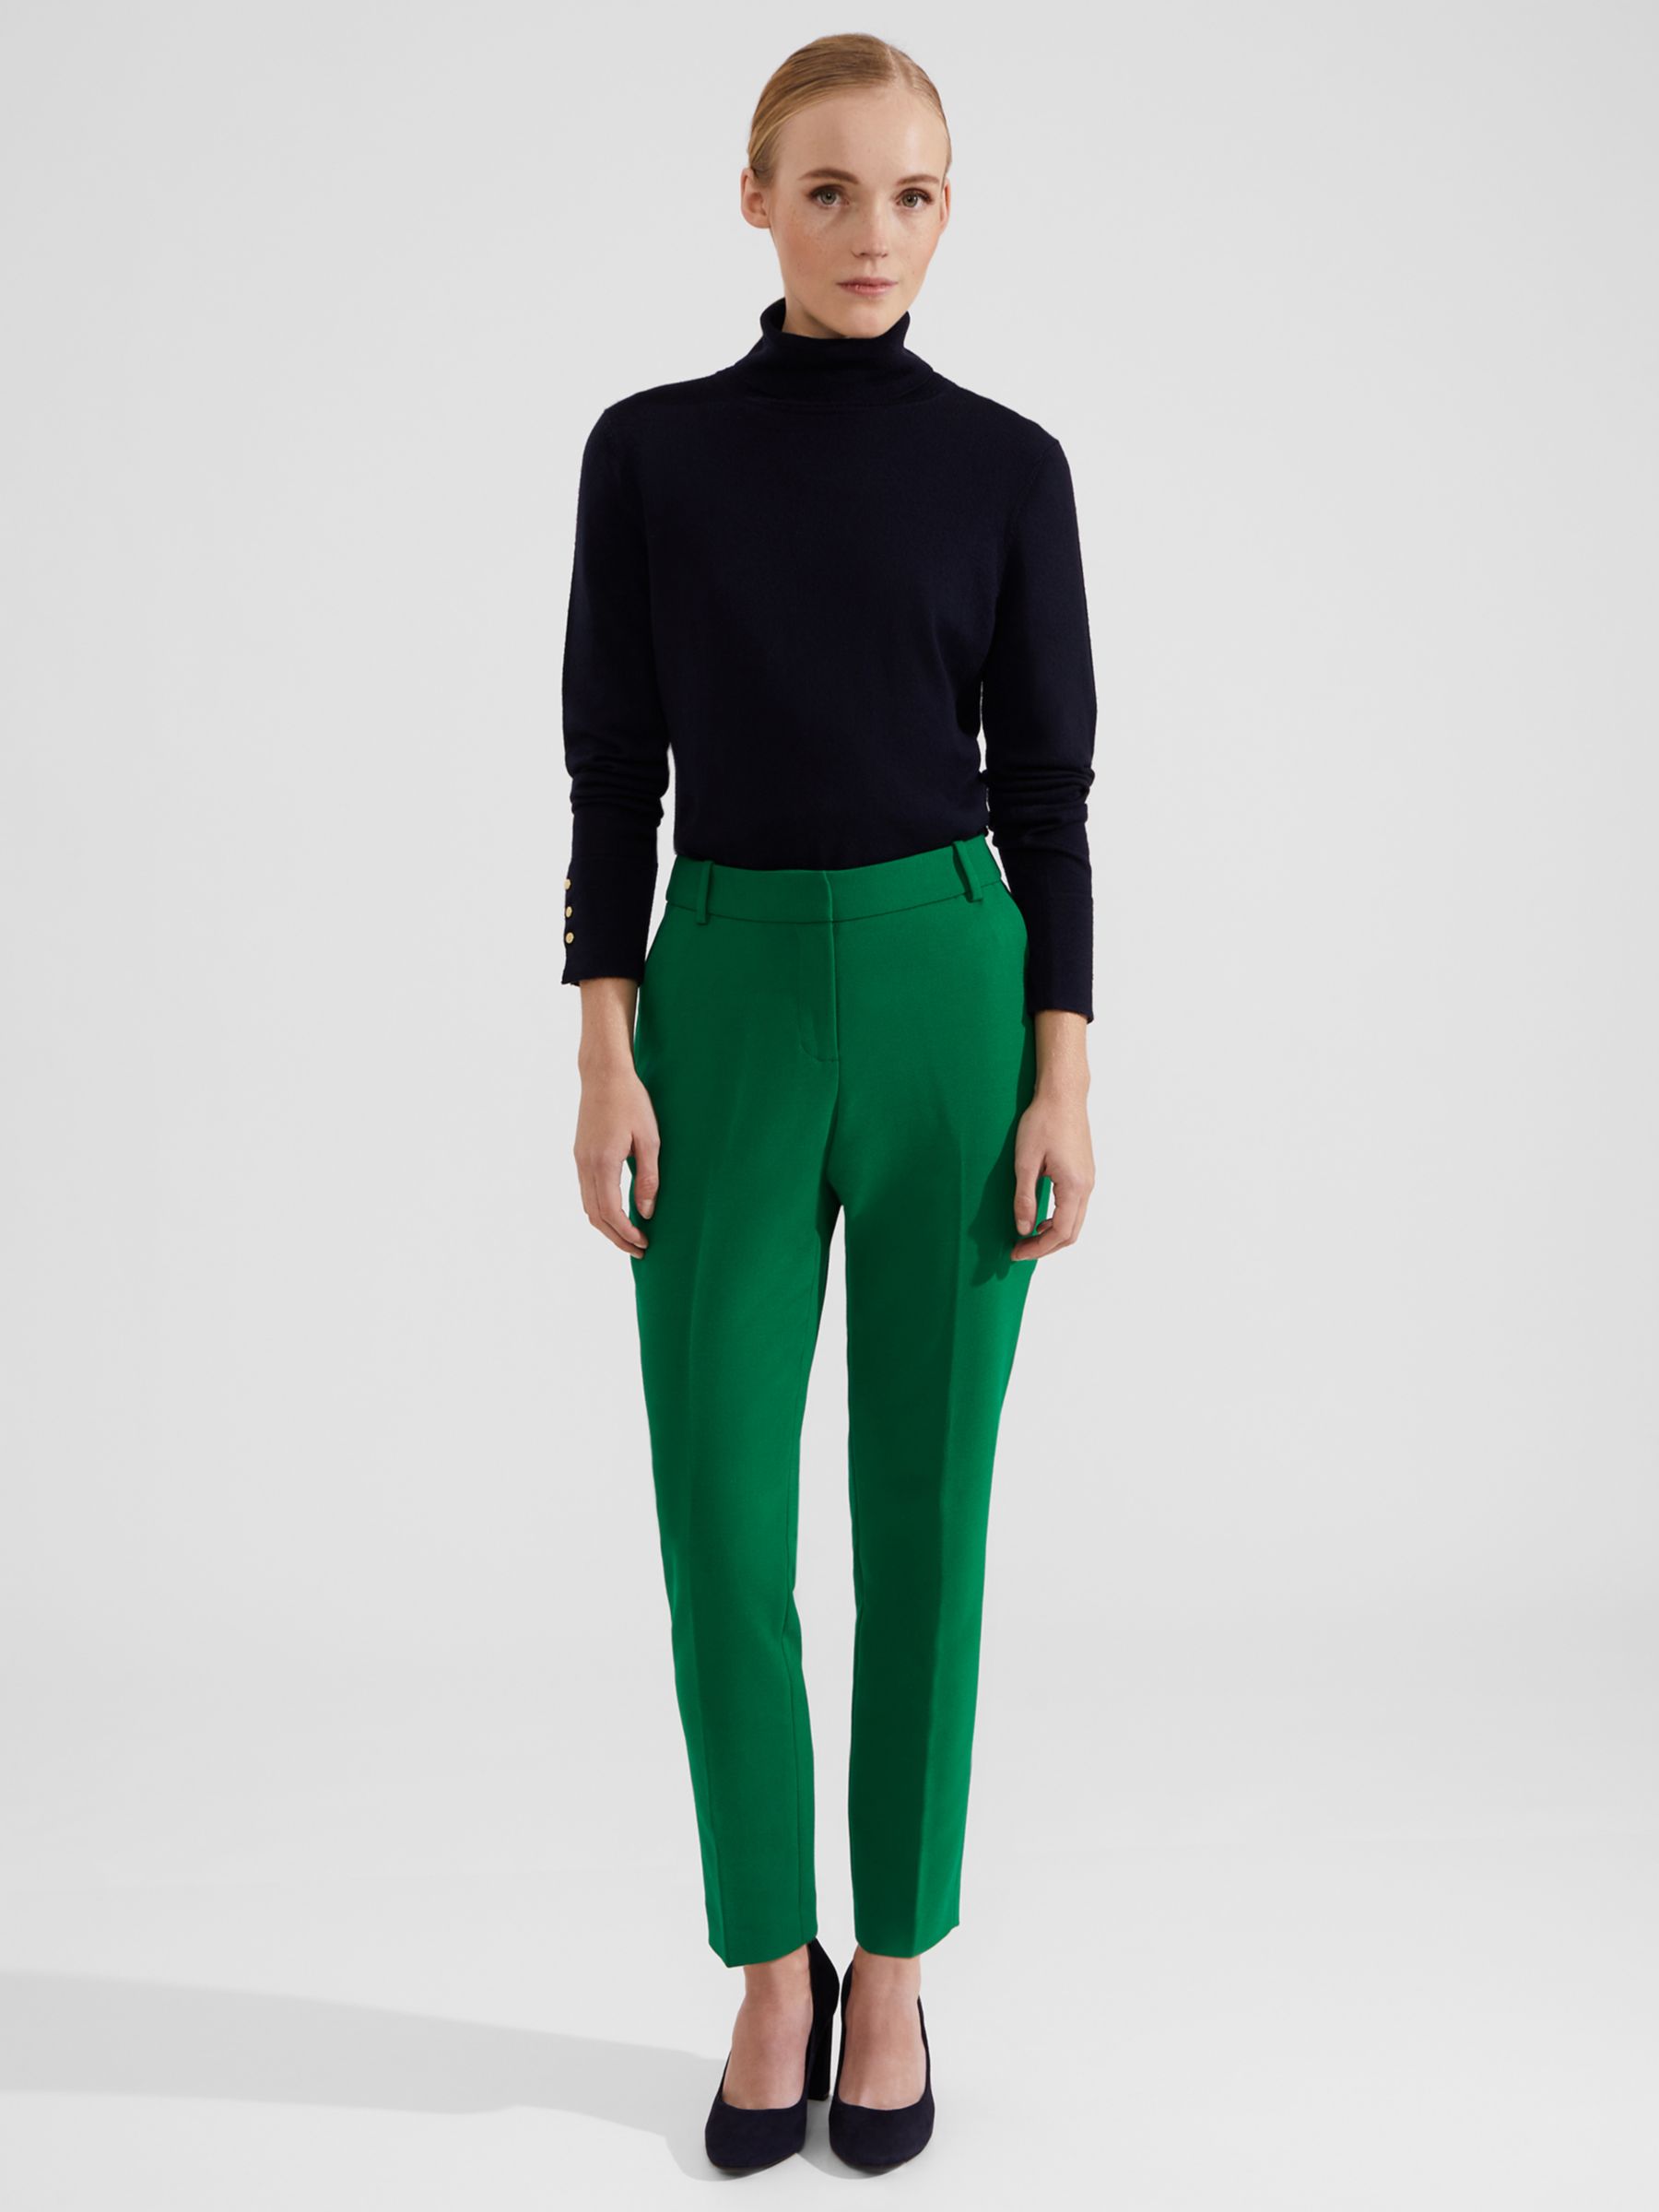 Hobbs Suki Tailored Trousers, Malachite Green at John Lewis & Partners